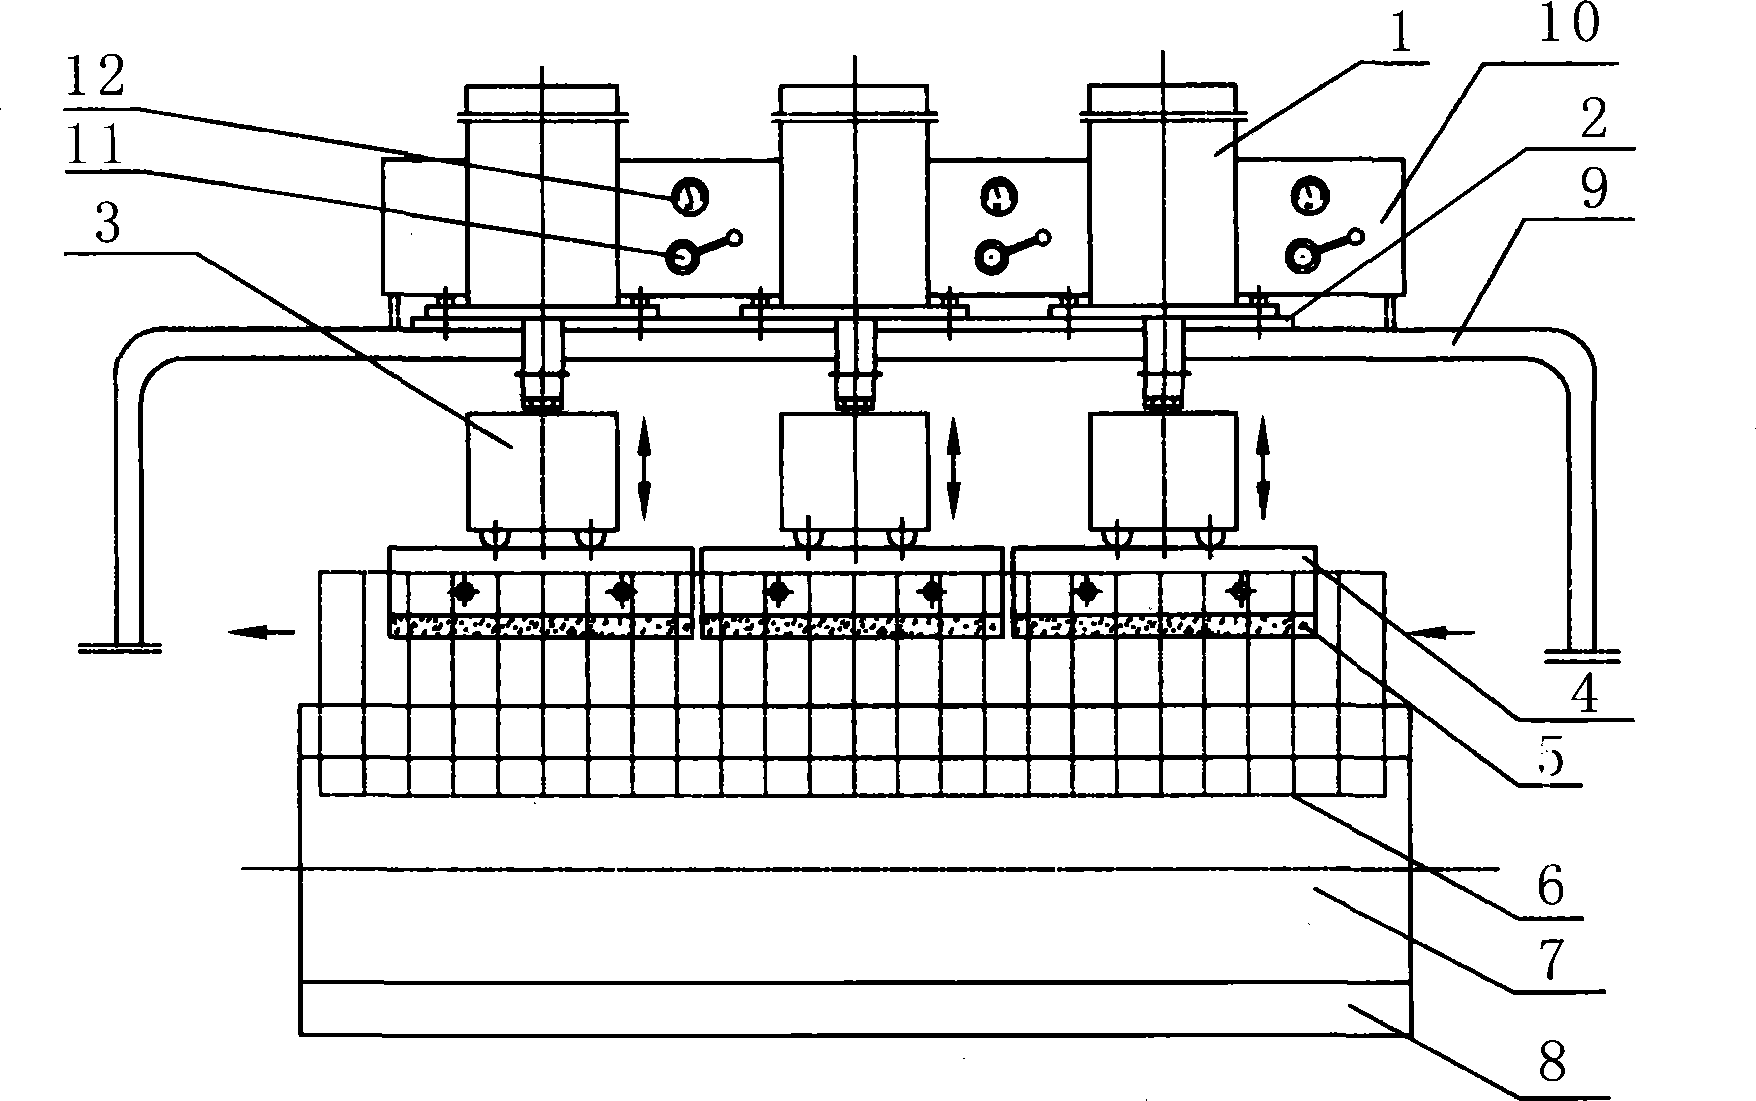 External diameter grinding machine pressurized by cylinder